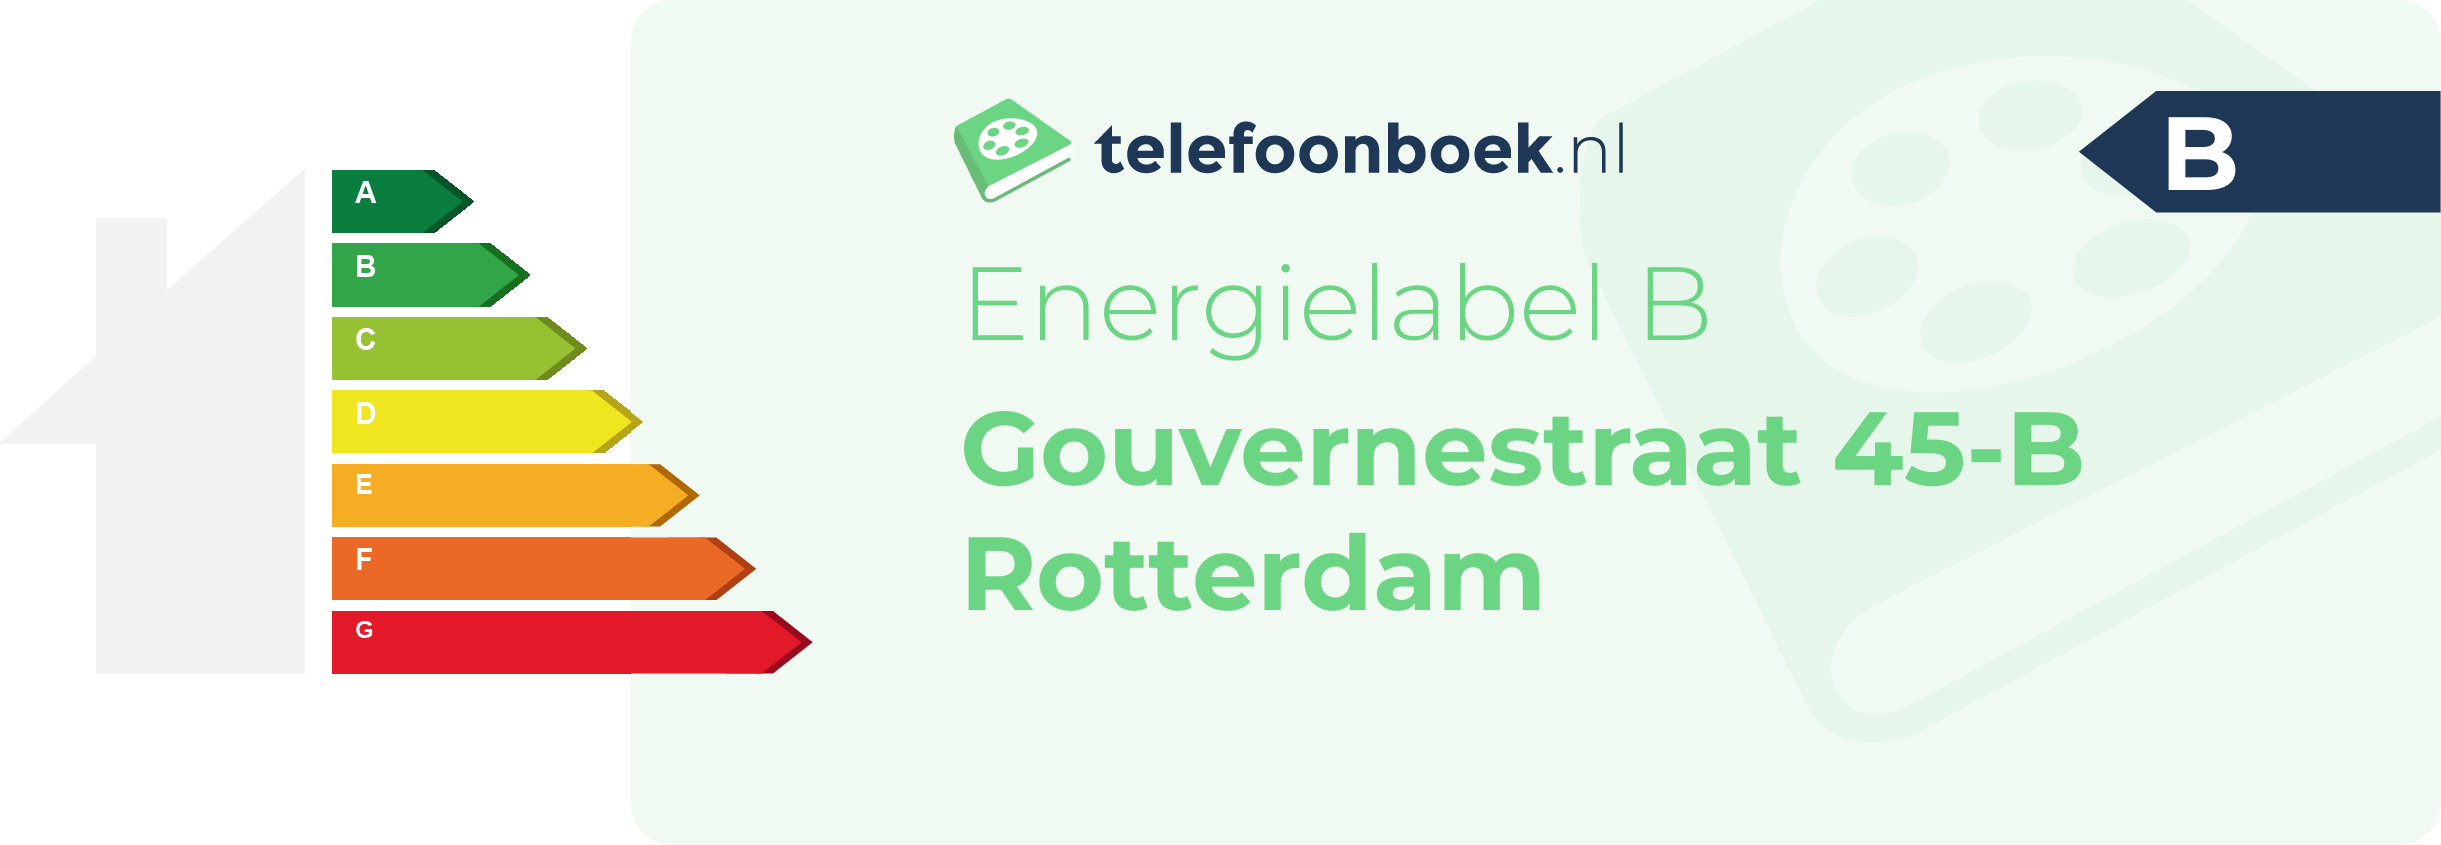 Energielabel Gouvernestraat 45-B Rotterdam